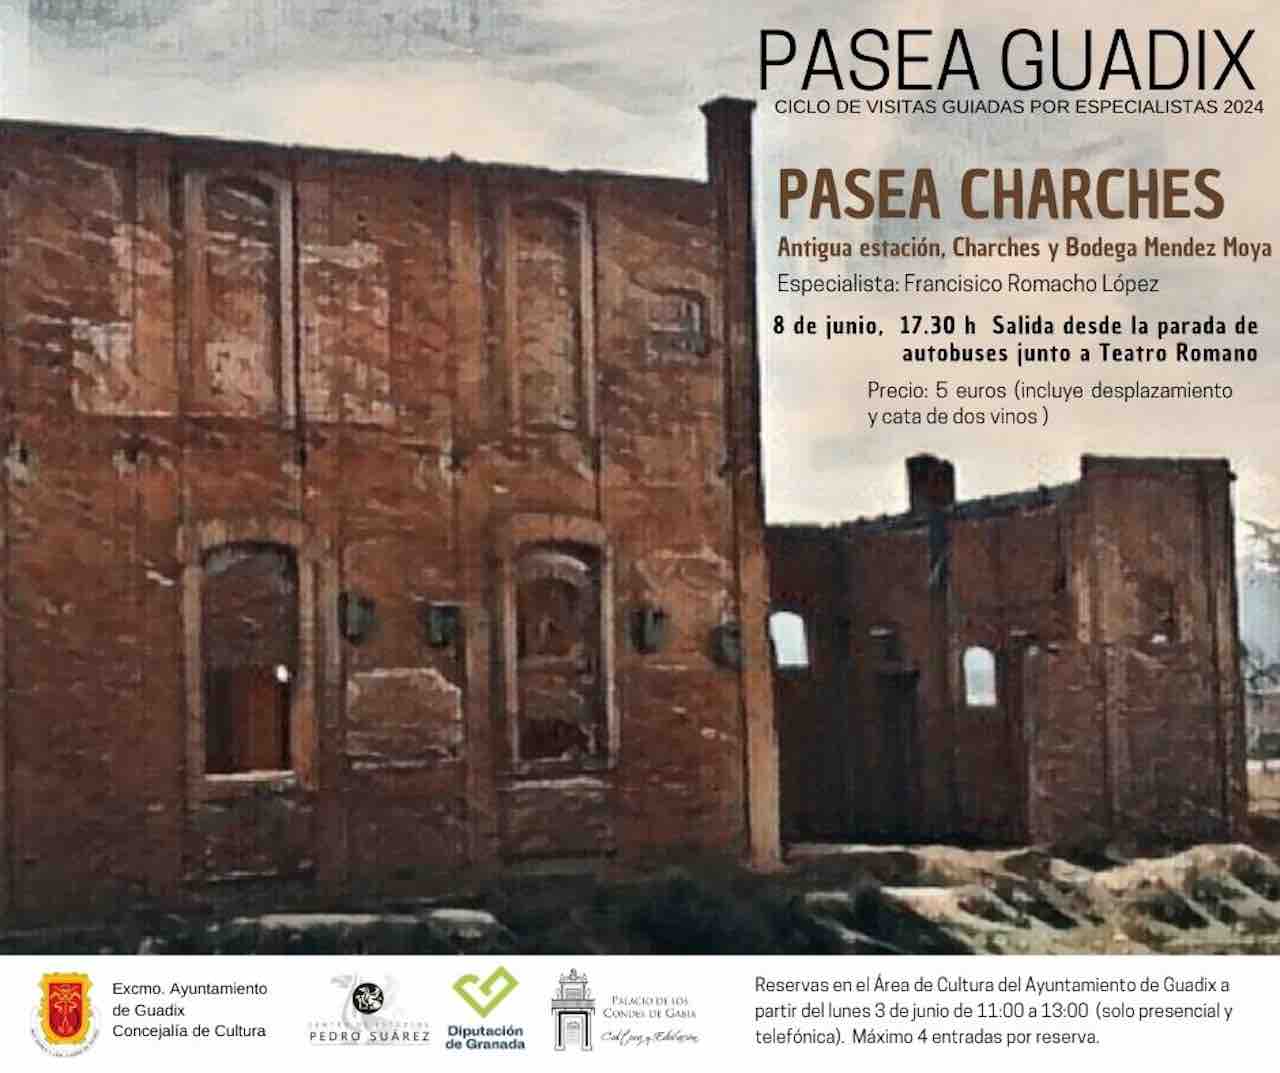 Pasea Guadix invita a conocer en su próxima ruta el municipio de Charches